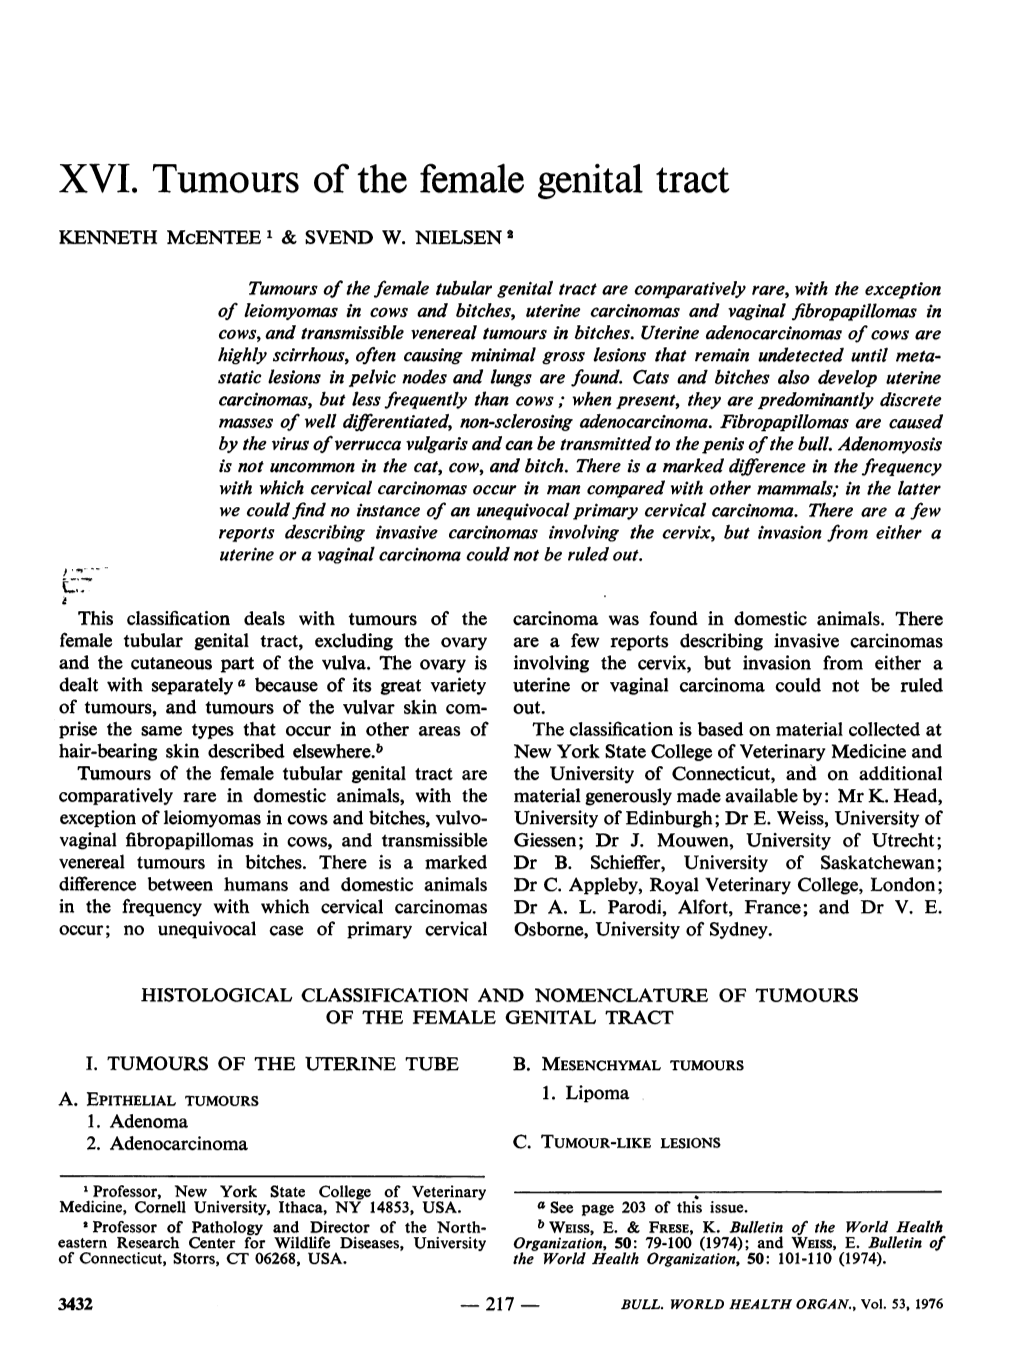 XVI. Tumours of the Female Genital Tract